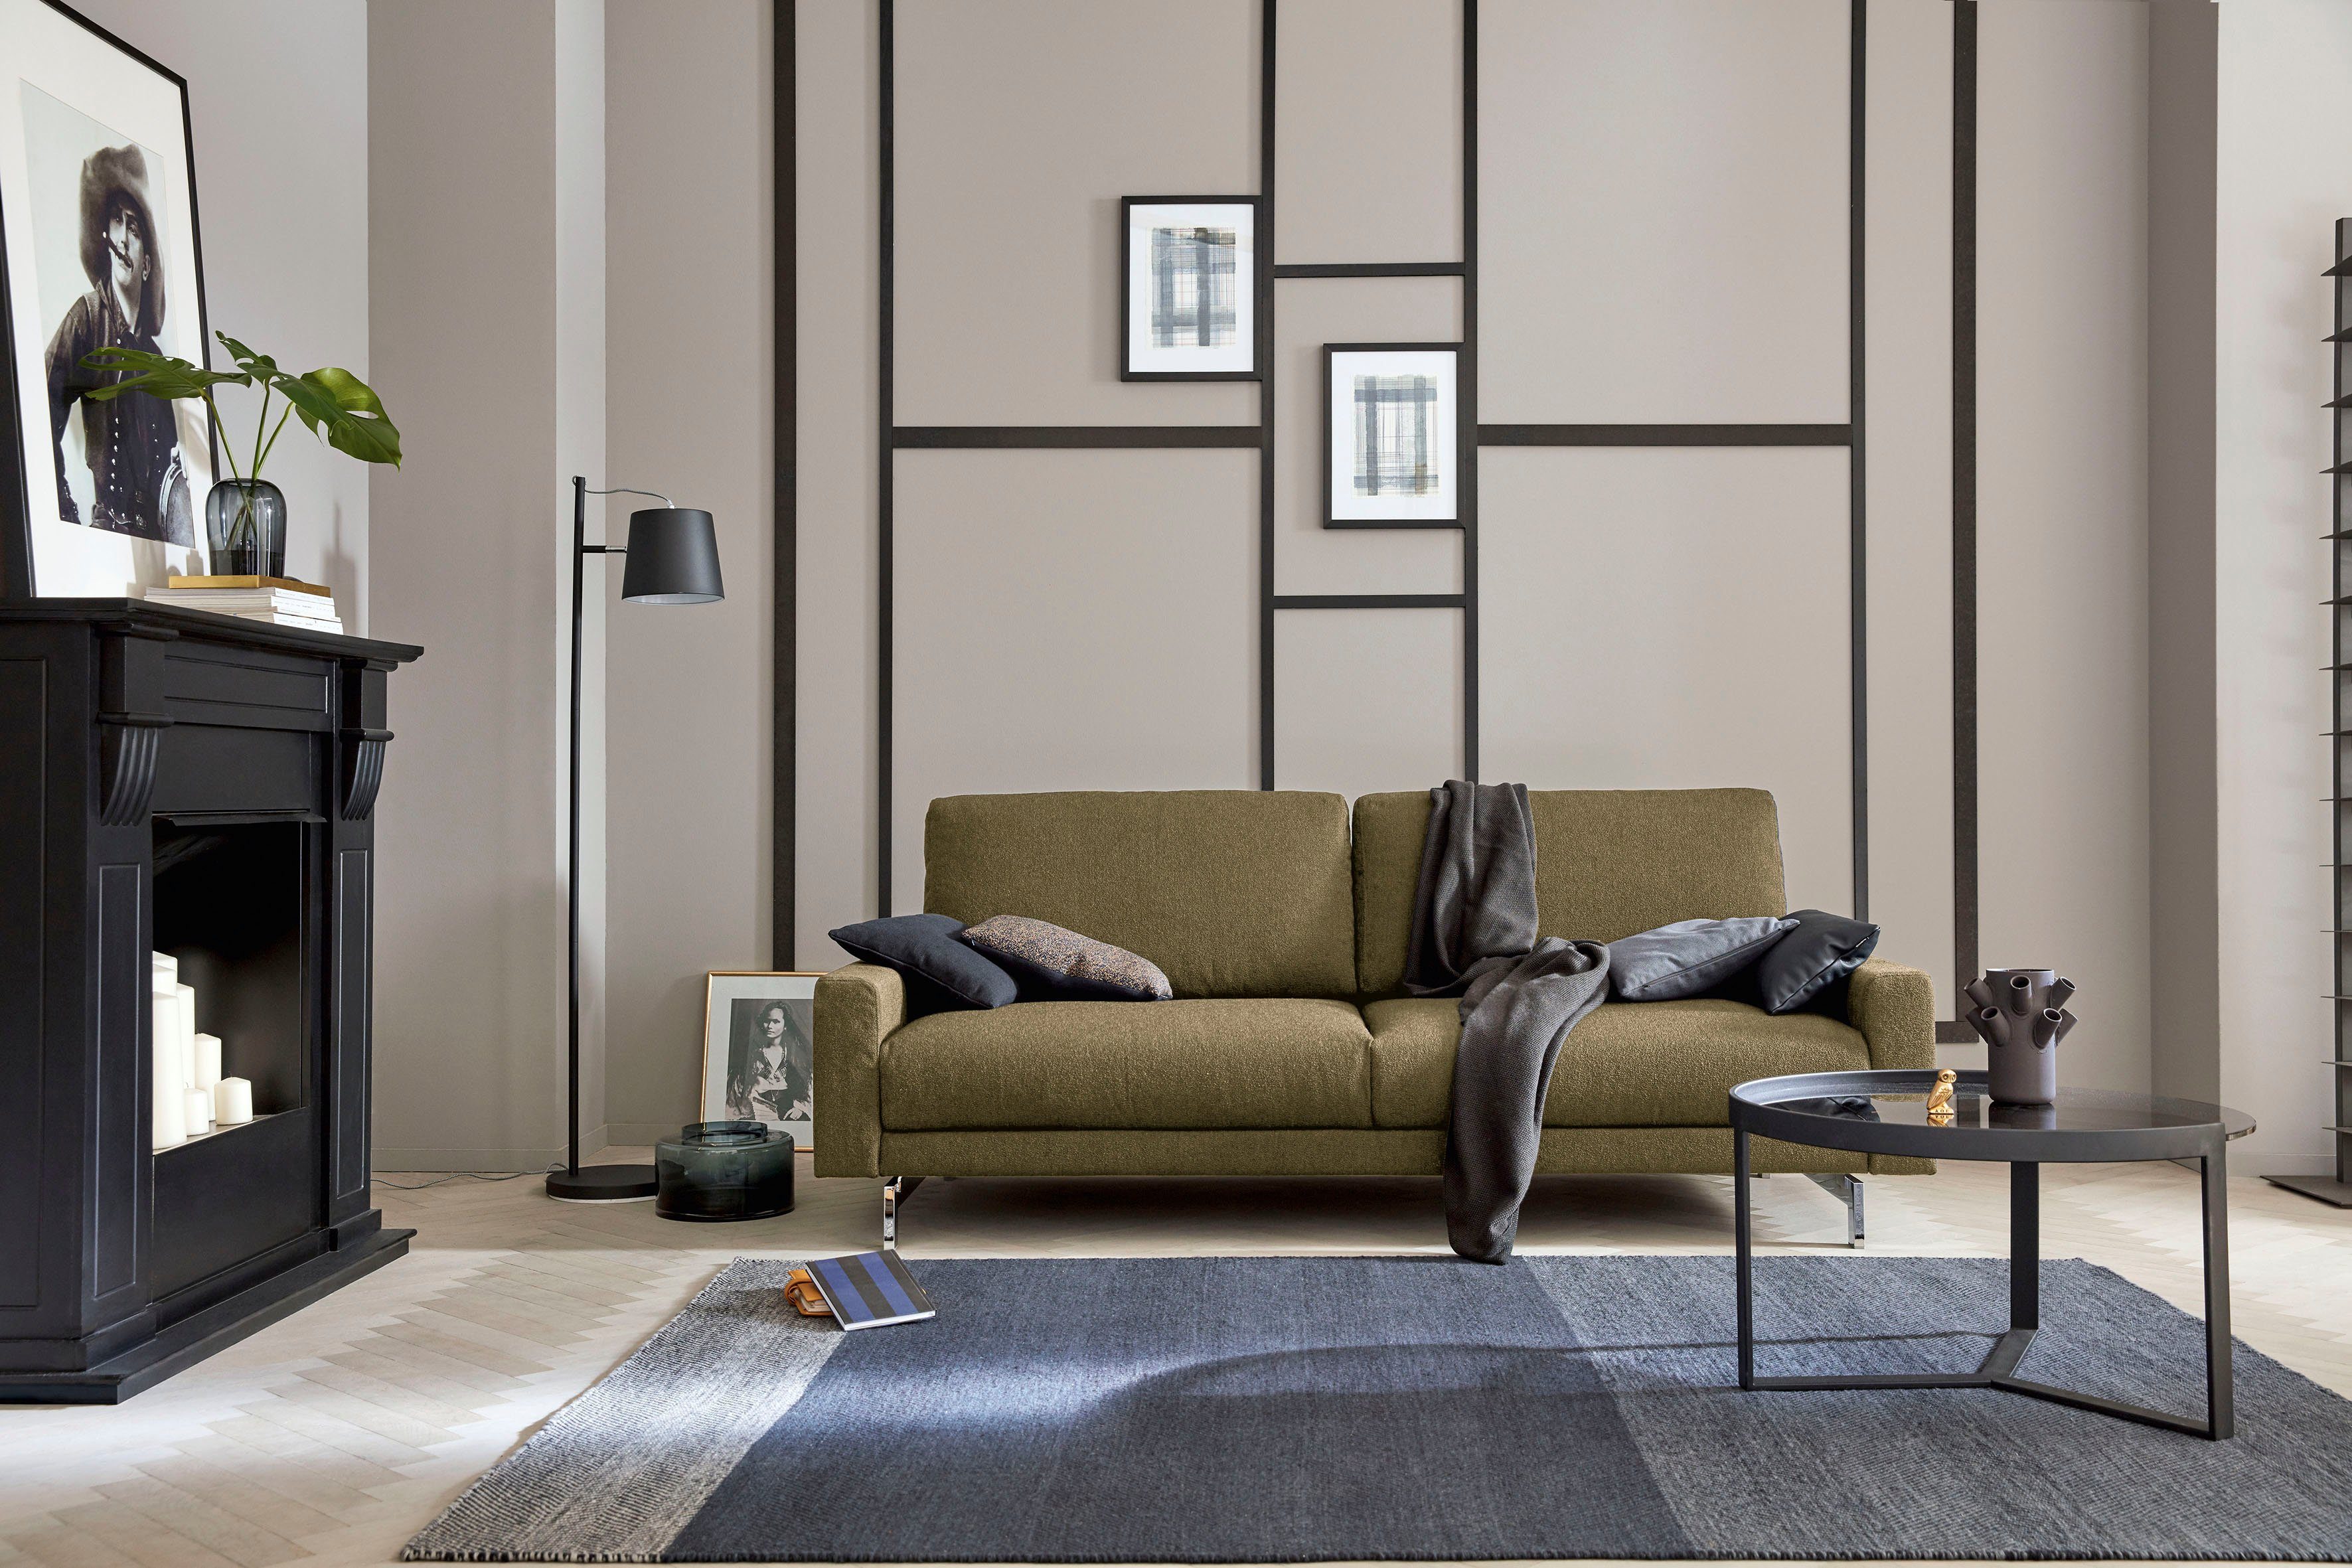 2-Sitzer Armlehne sofa chromfarben cm glänzend, niedrig, Fuß 164 Breite hs.450, hülsta